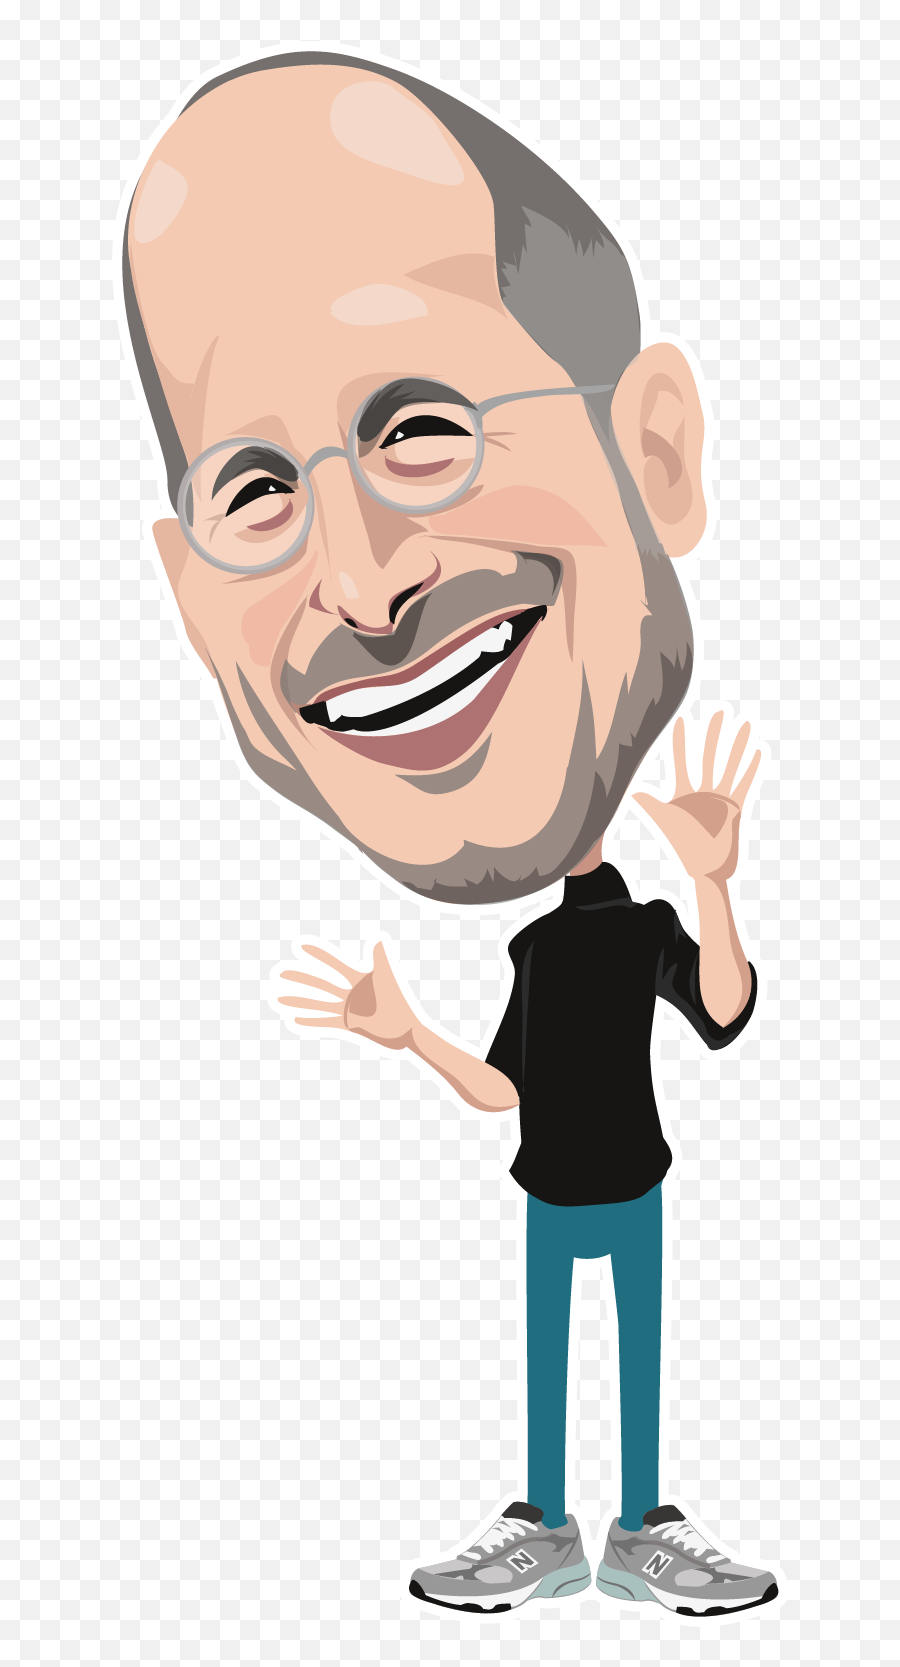 Steve Jobs Apple Cartoon Facial Expression Clip Art - Steve Emoji,Facial Expressions Clipart